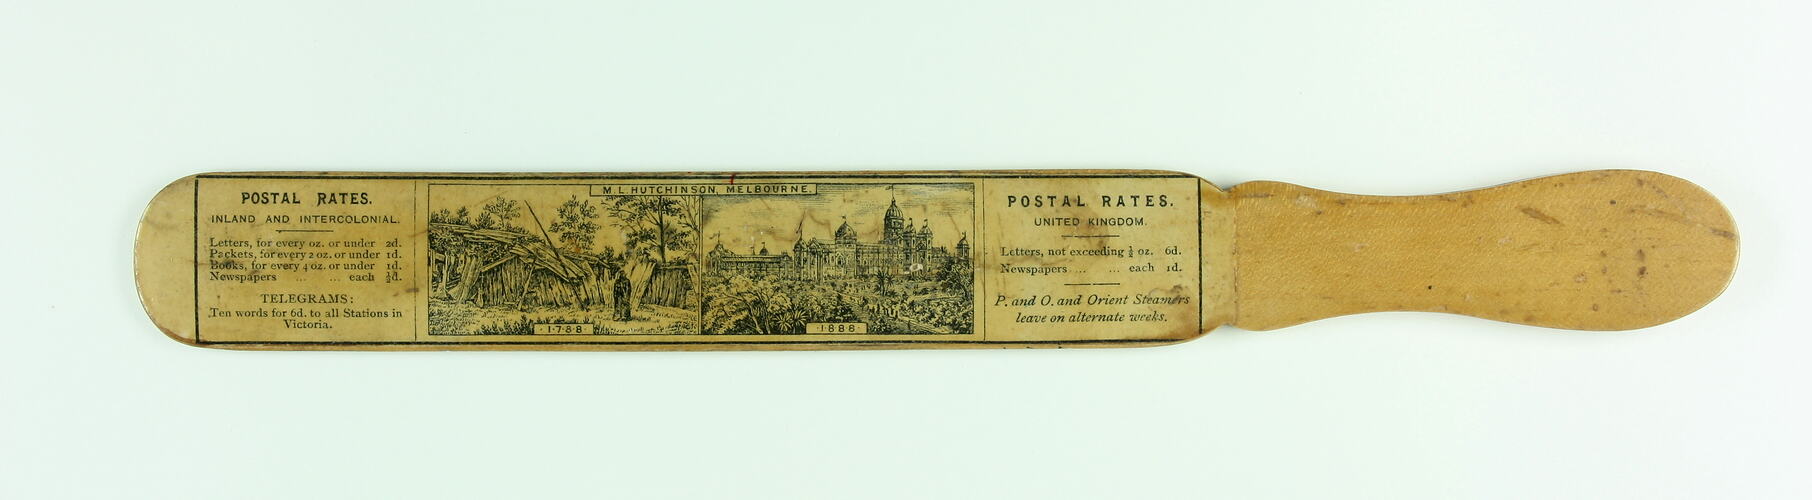 Paper Knife - Melbourne Centennial Exhibition, 1888